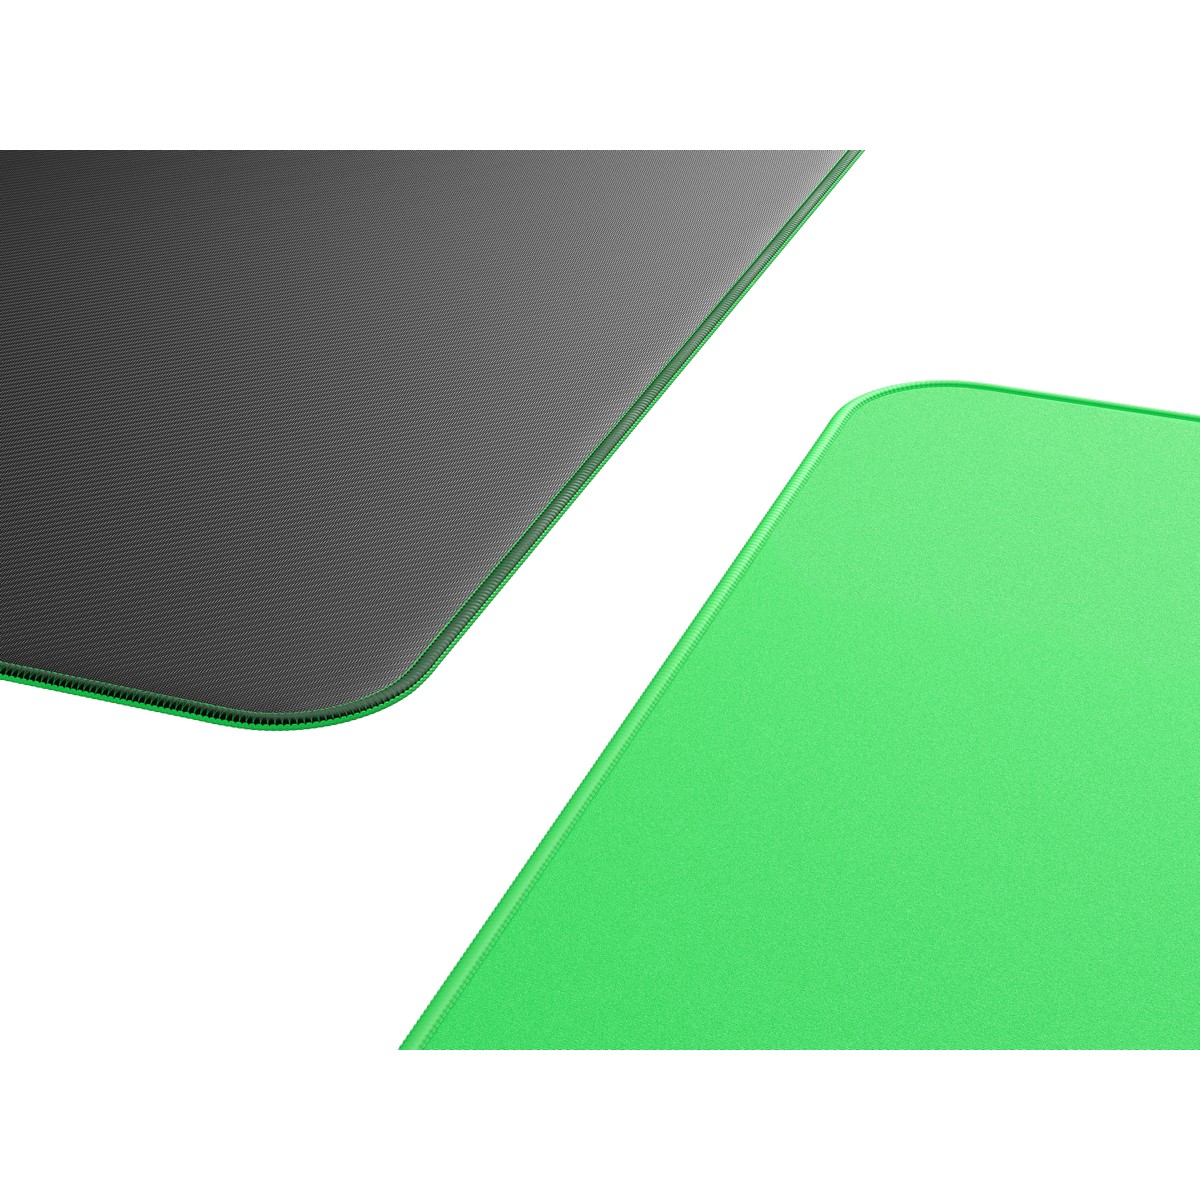 Glorious - Glorious Green Screen Mouse Pad - XXL Green 914x457x3mm (GLO-MP-GS)